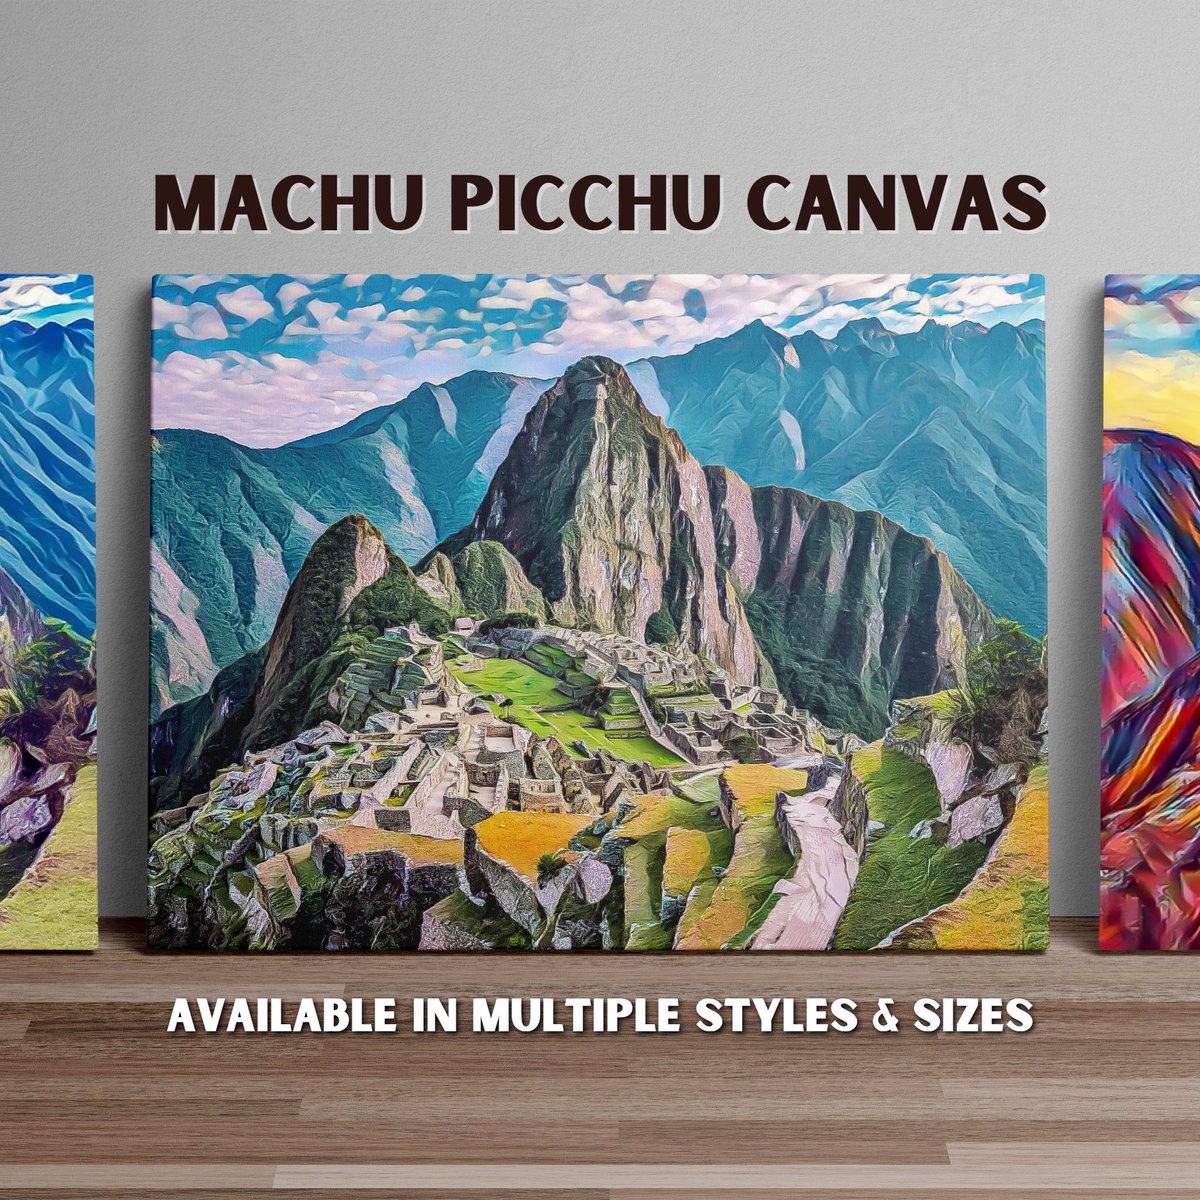 Machu Picchu Canvas Wall Art Print

etsy.com/listing/135717…

#machupicchu #canvaswallart #travelprint #travelgift #traveldecor